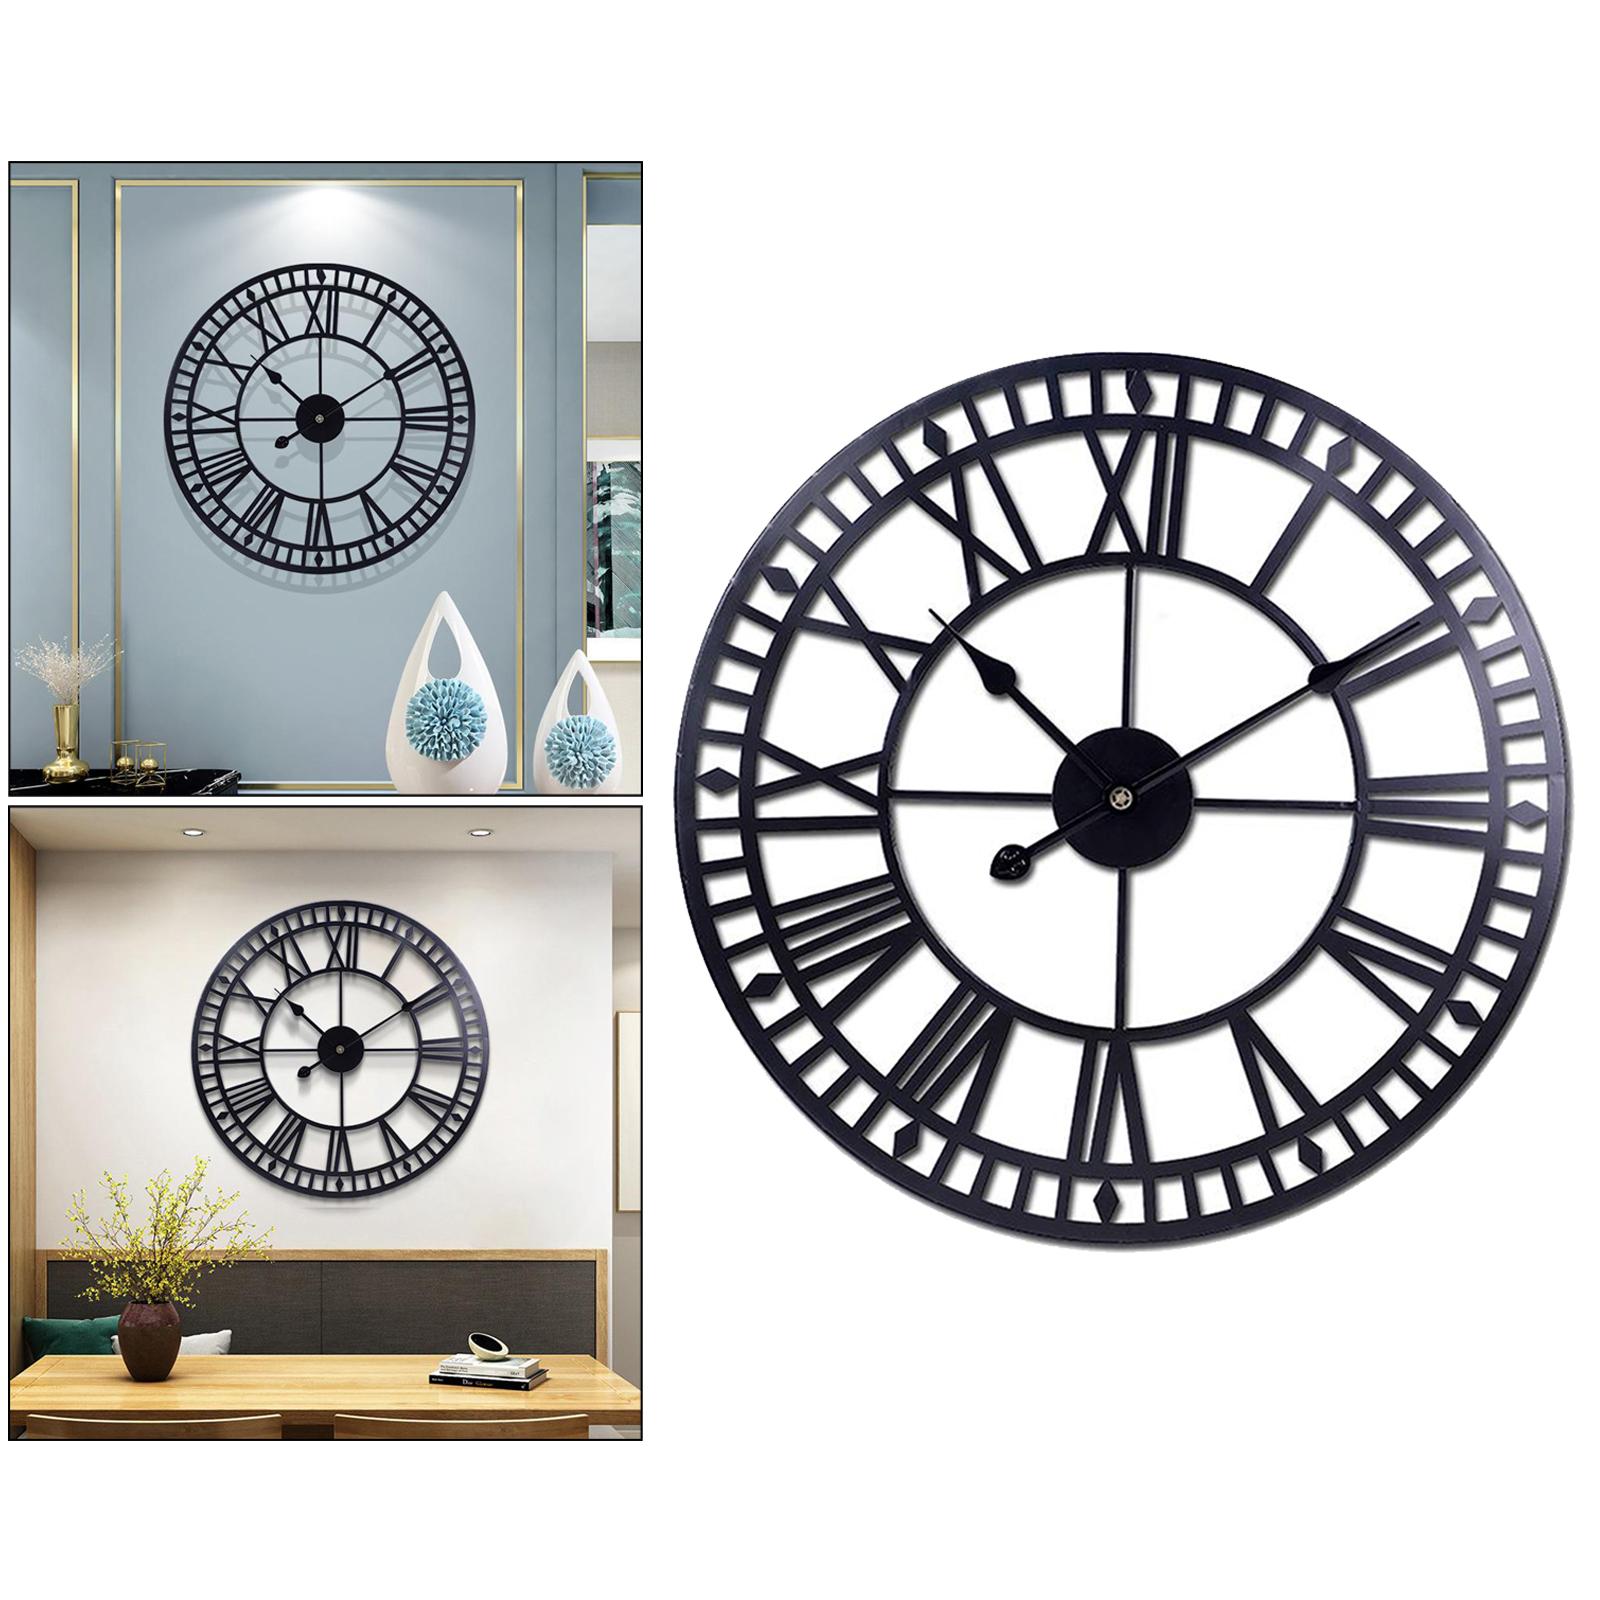 Vintage Wall Clock 40cm Clocks Quiet Swing Decorative Clocks Black